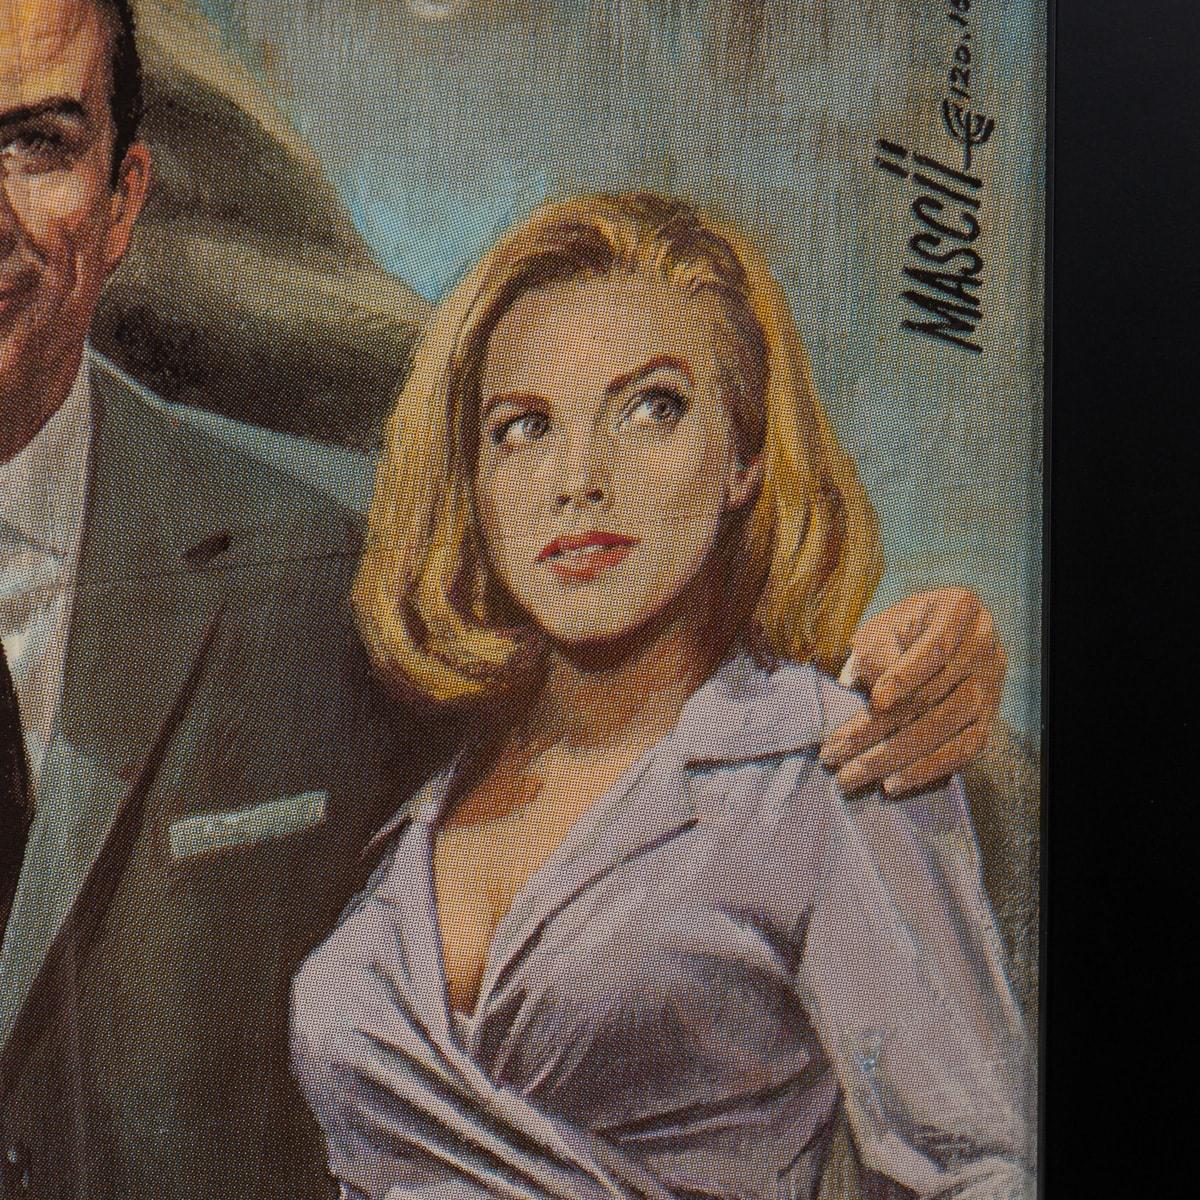 Original French Release James Bond Goldfinger Poster c.1964 For Sale 4